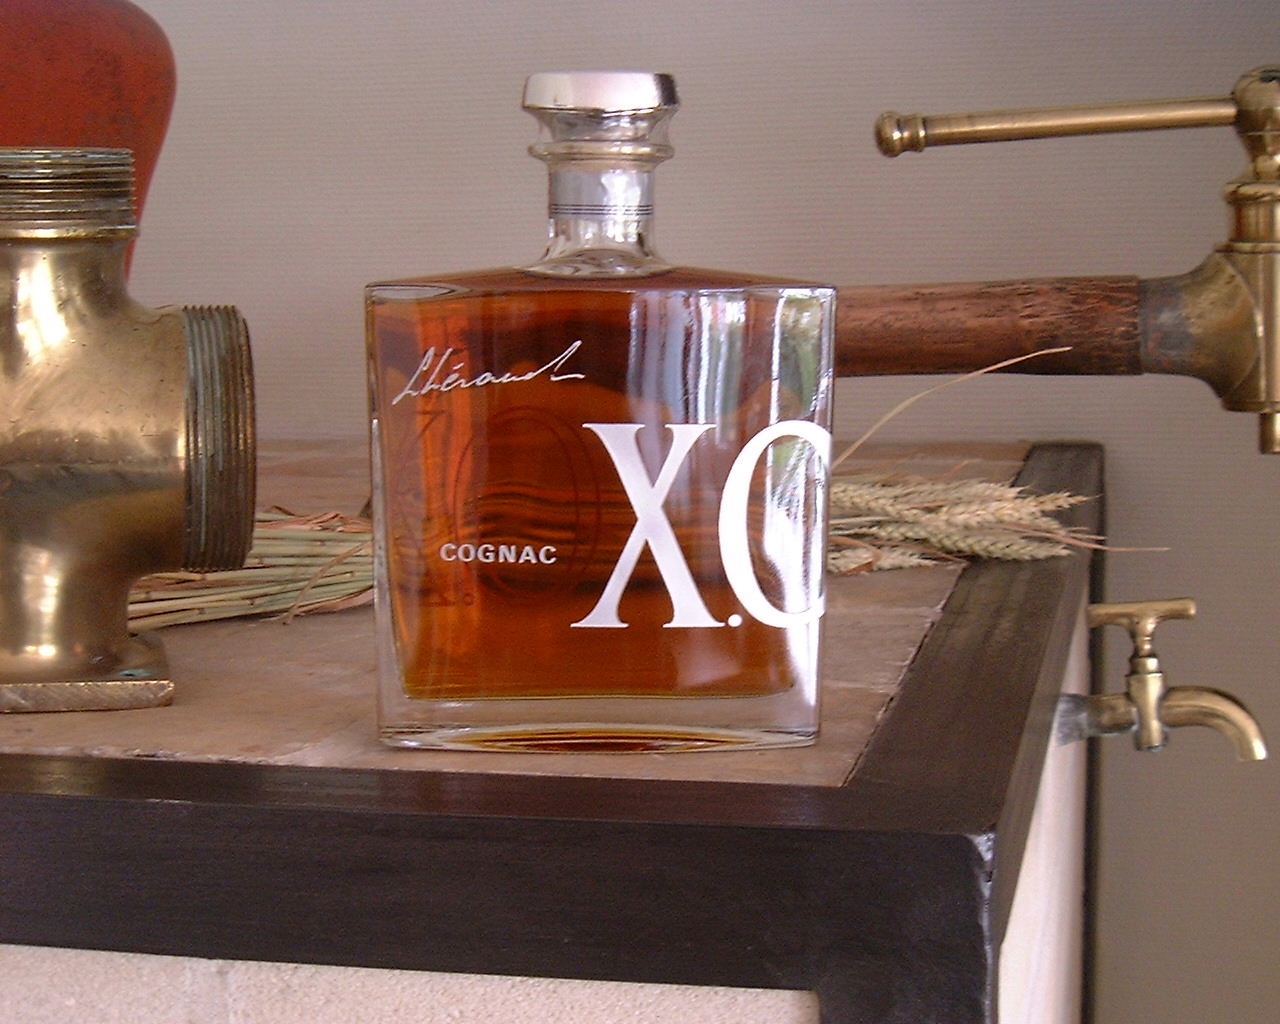 Cognac Lheraud XO Eugenie